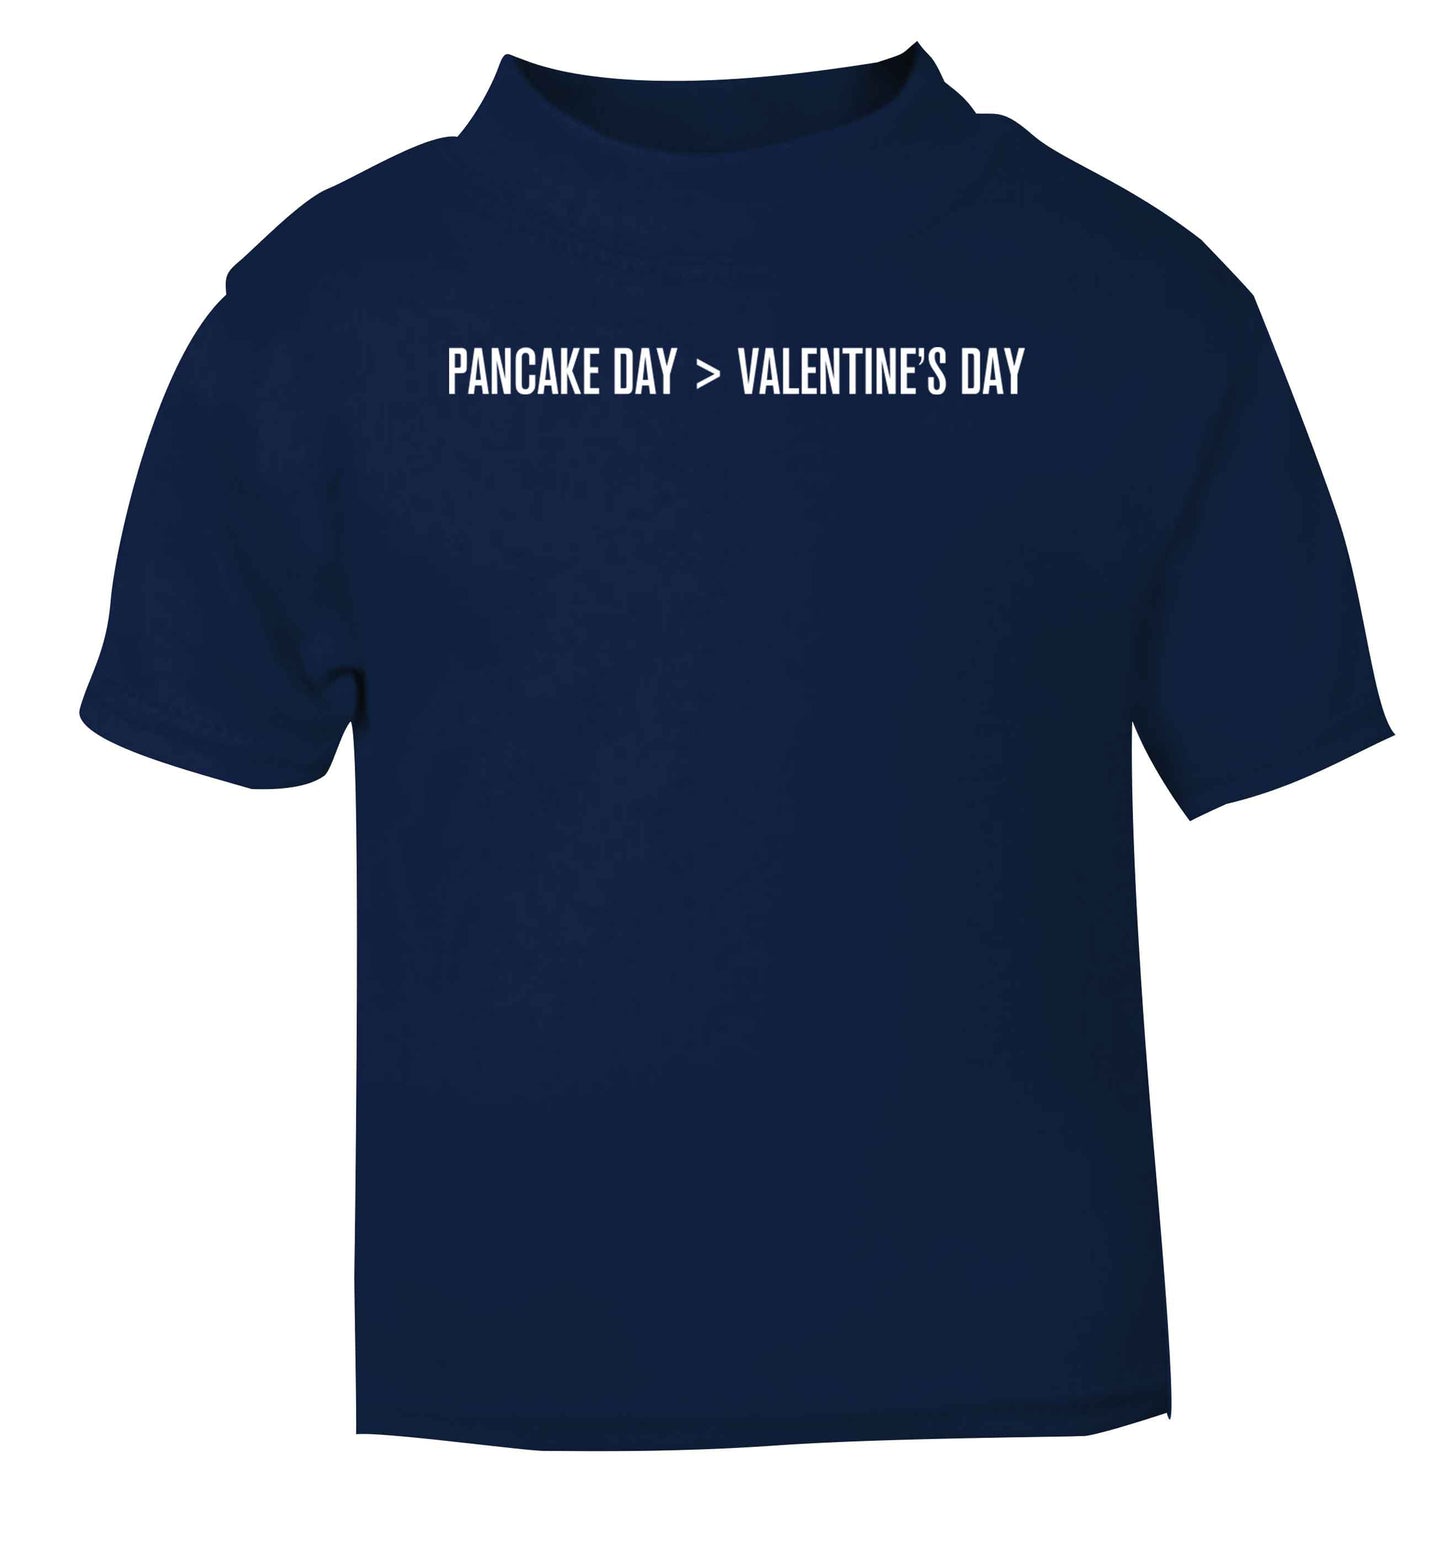 Pancake day > valentines day navy baby toddler Tshirt 2 Years